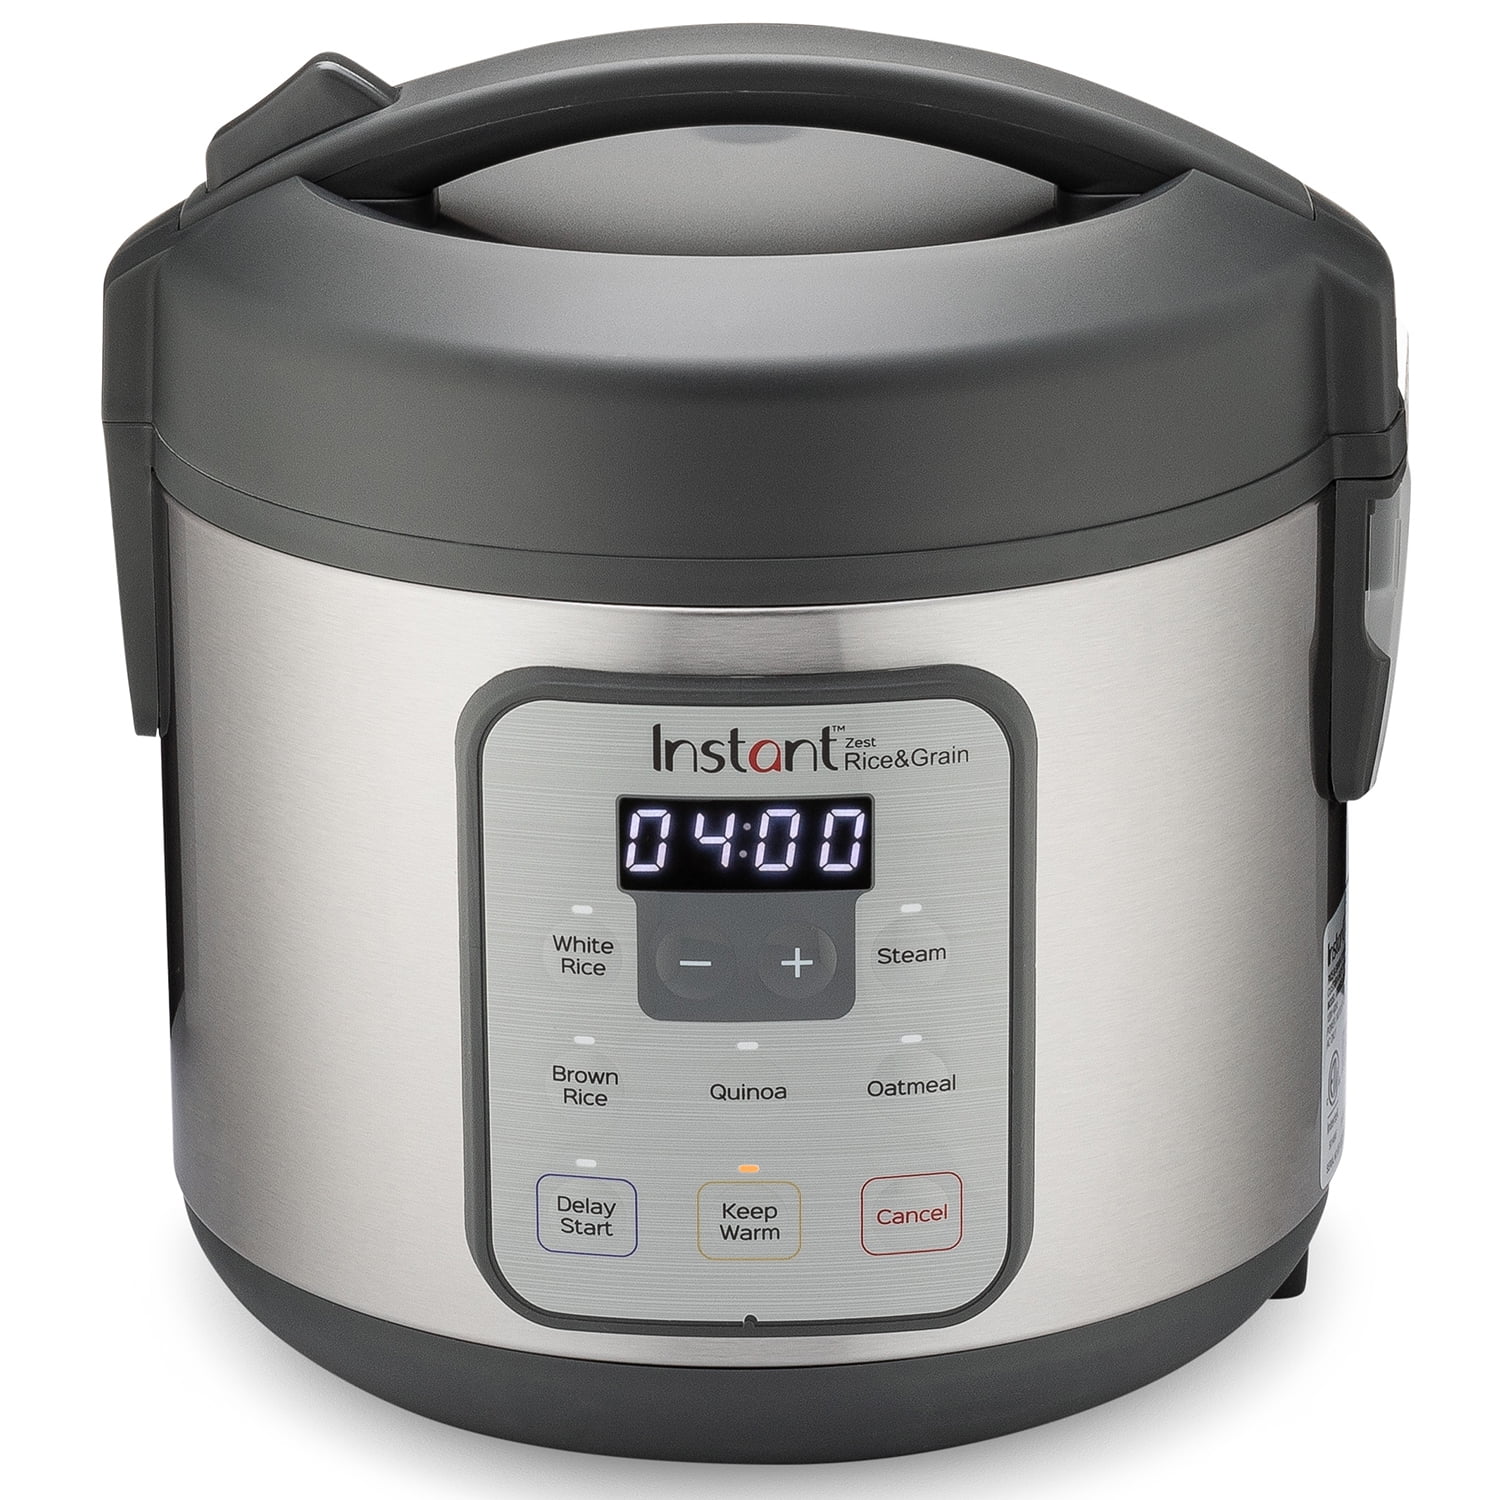 Instant Pot Rio Wide 7.5qt 7-in-1 Electric Pressure Cooker & Multi-cooker :  Target